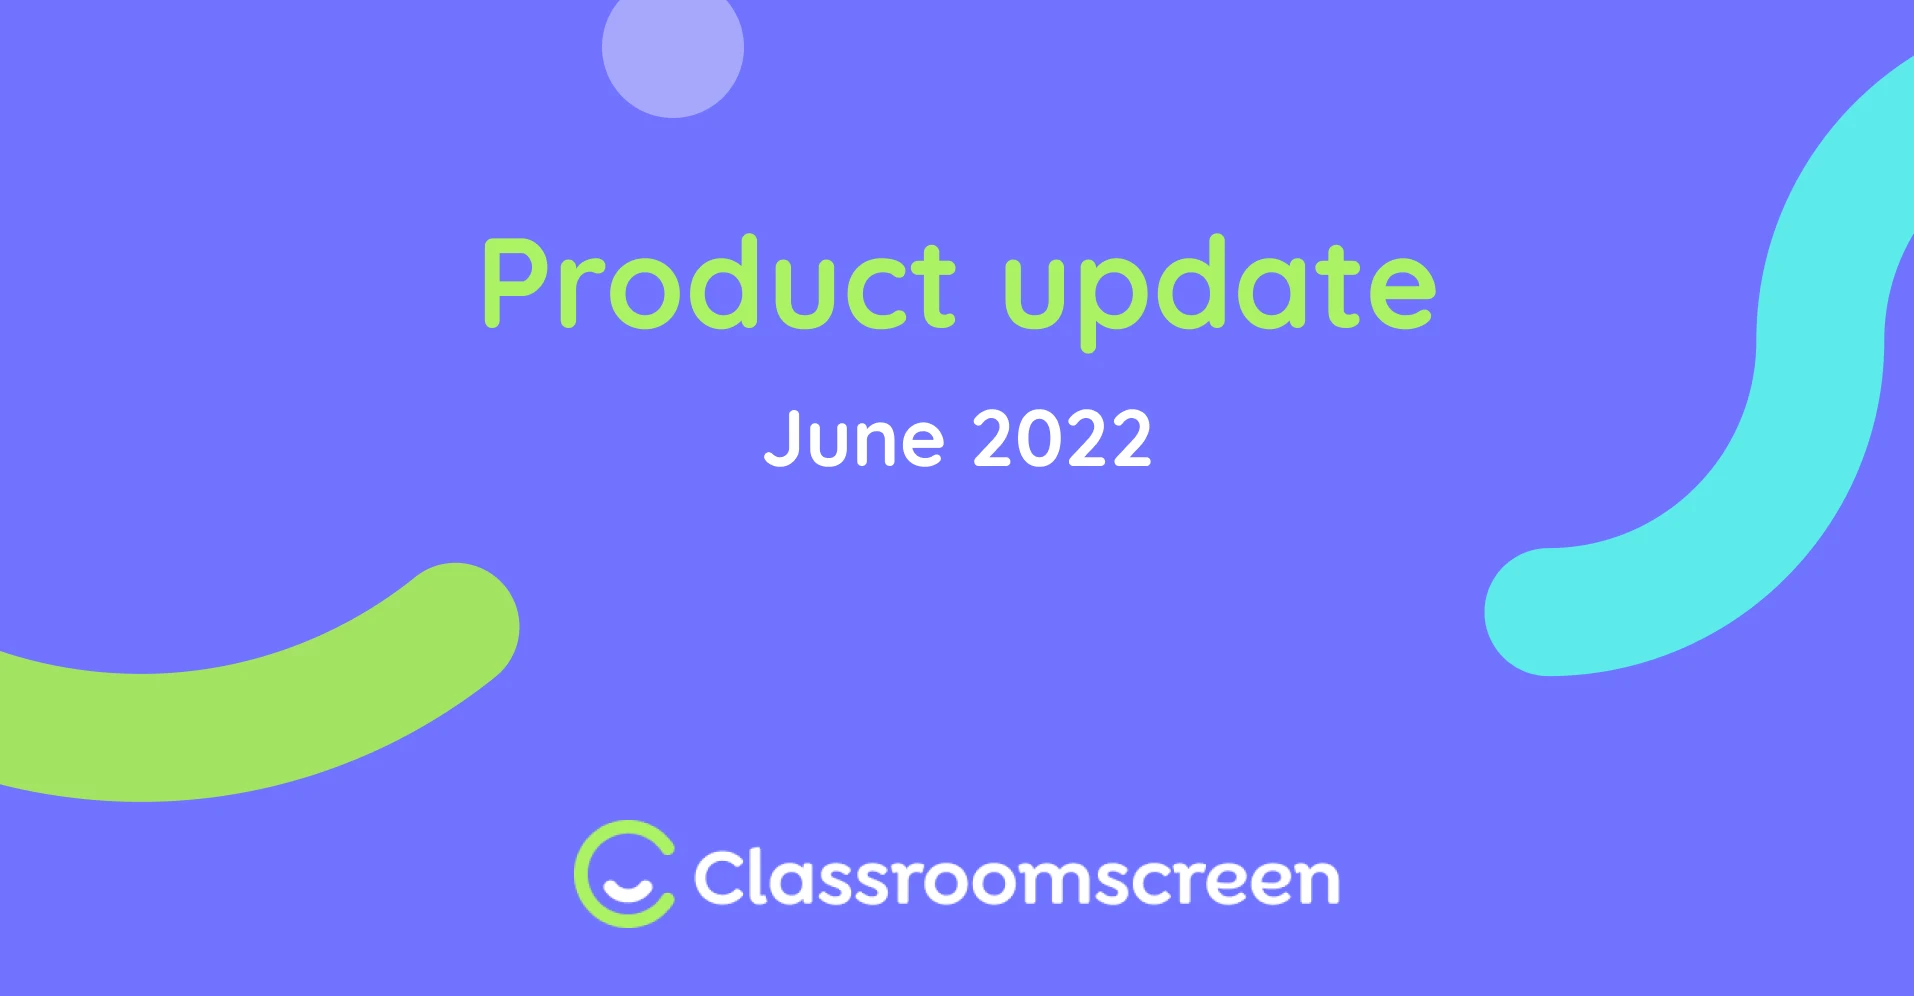 Product update June 2022